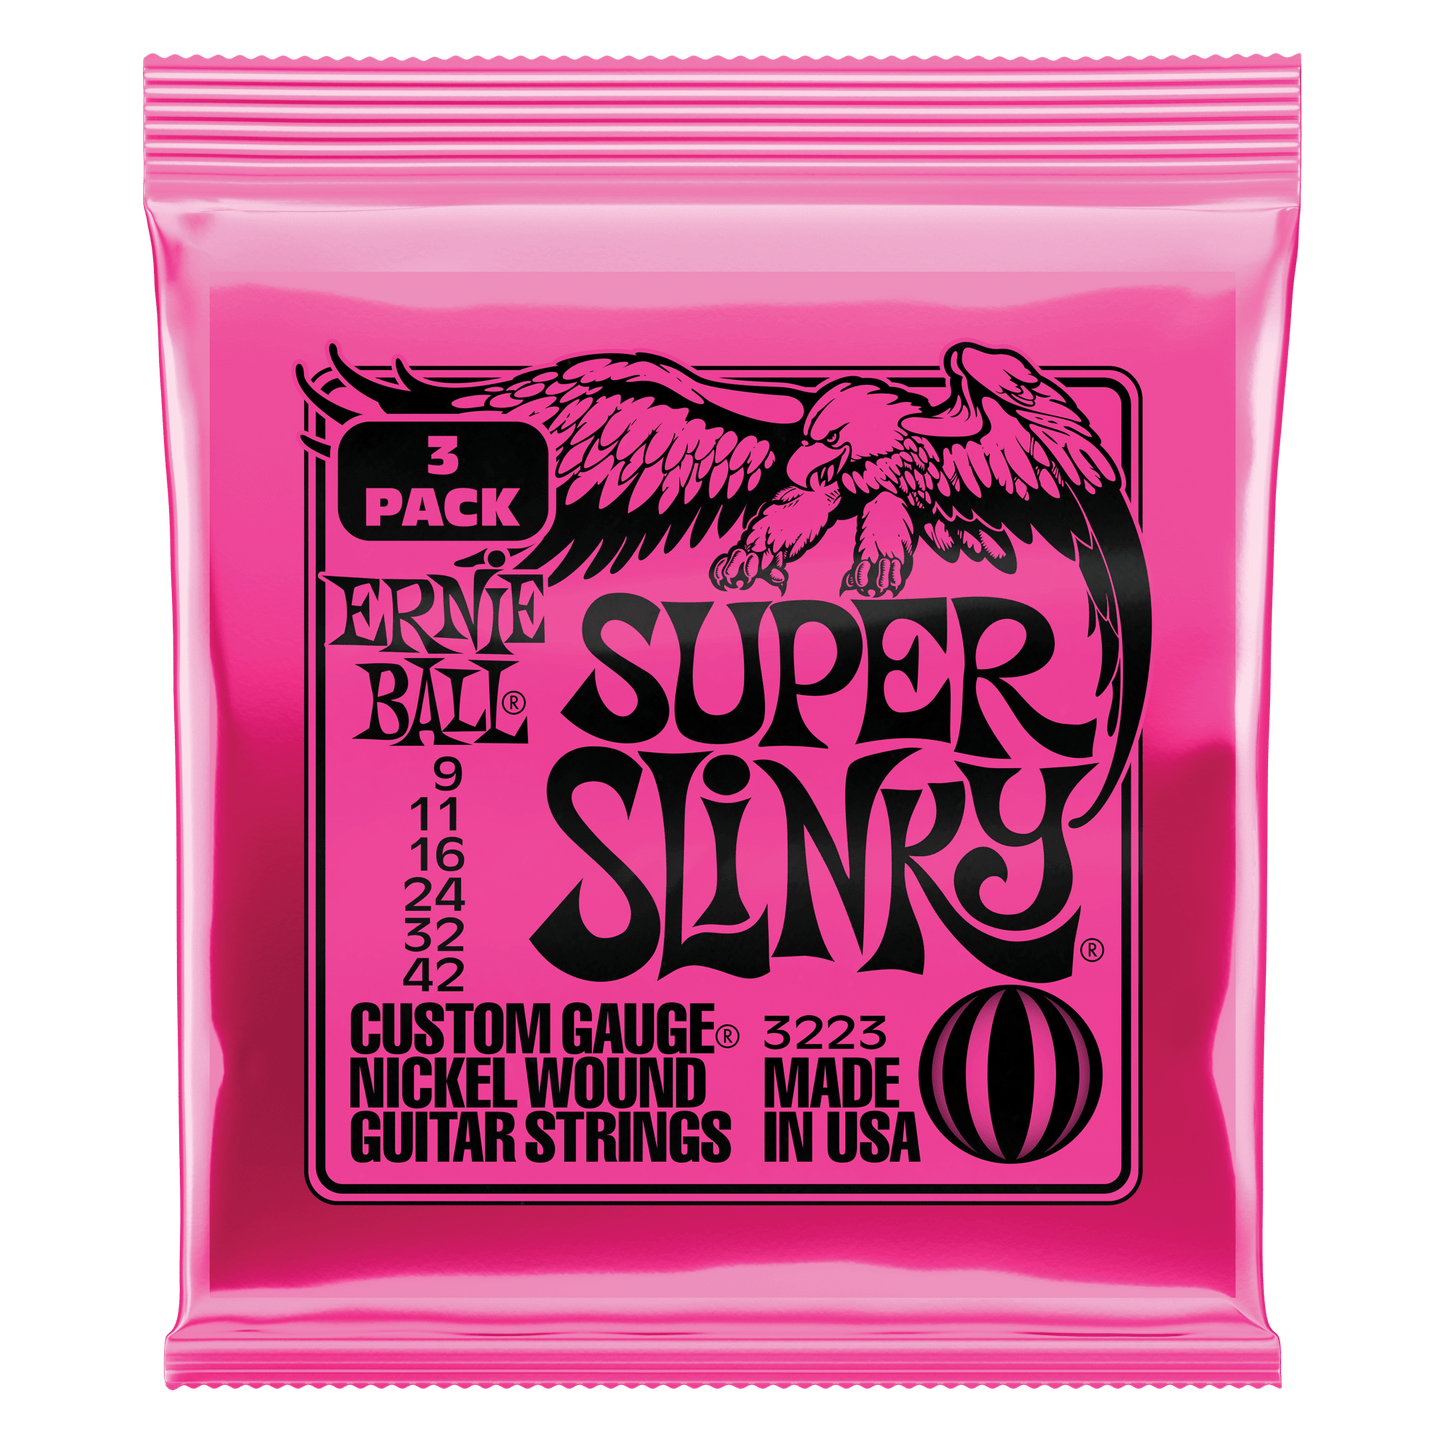 Ernie Ball Super Slinky Electric Guitar Strings (.009 -.042) **3 PACK**